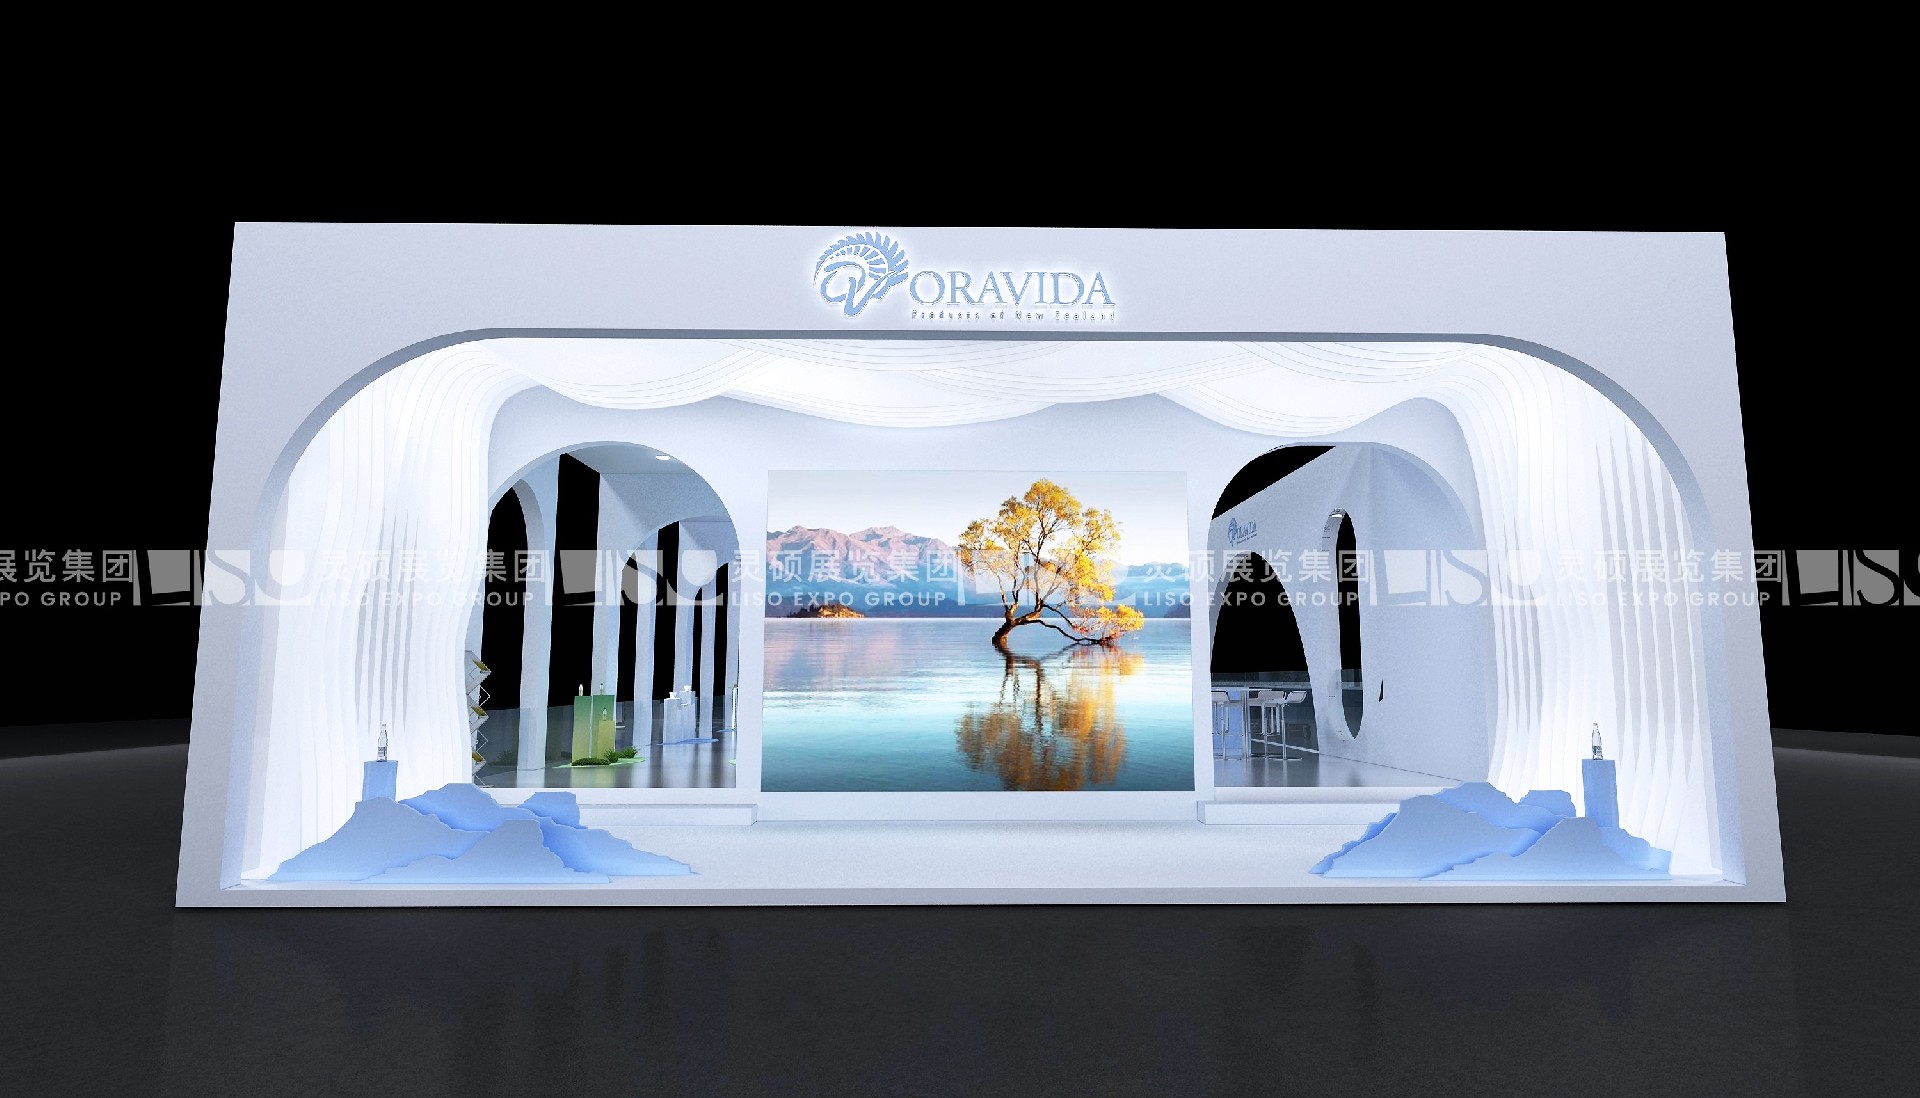 ORAVIDA - CIIE Booth Design Case